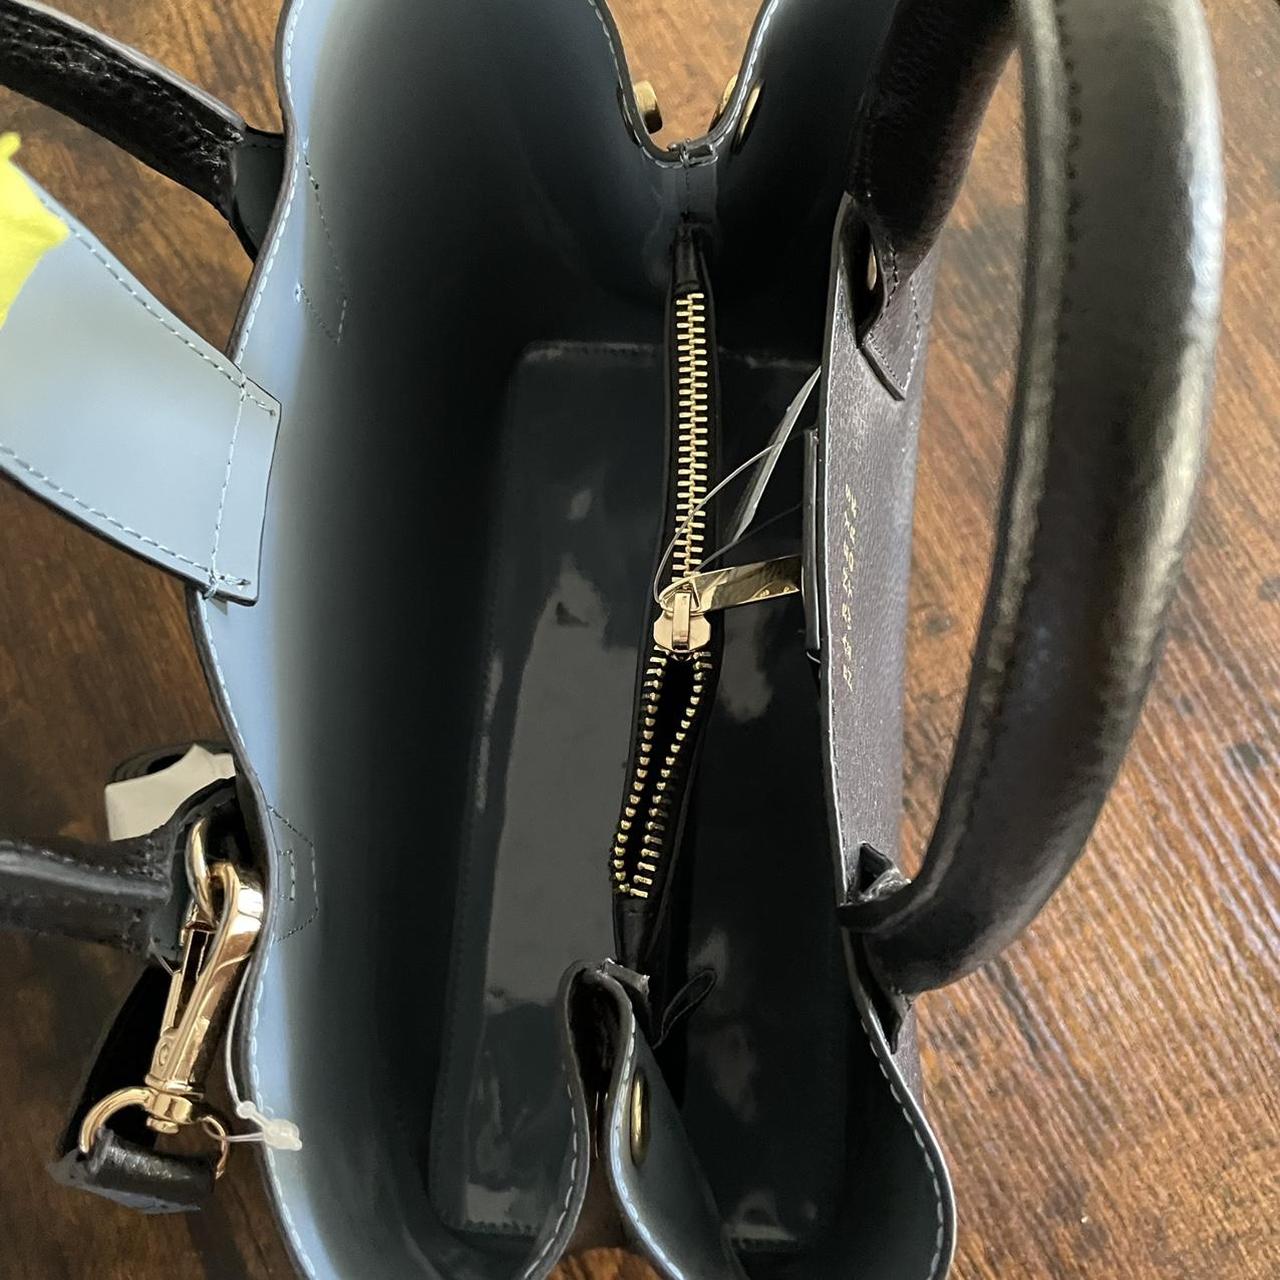 Product Image 3 - Barney’s New York
Jane leather satchel